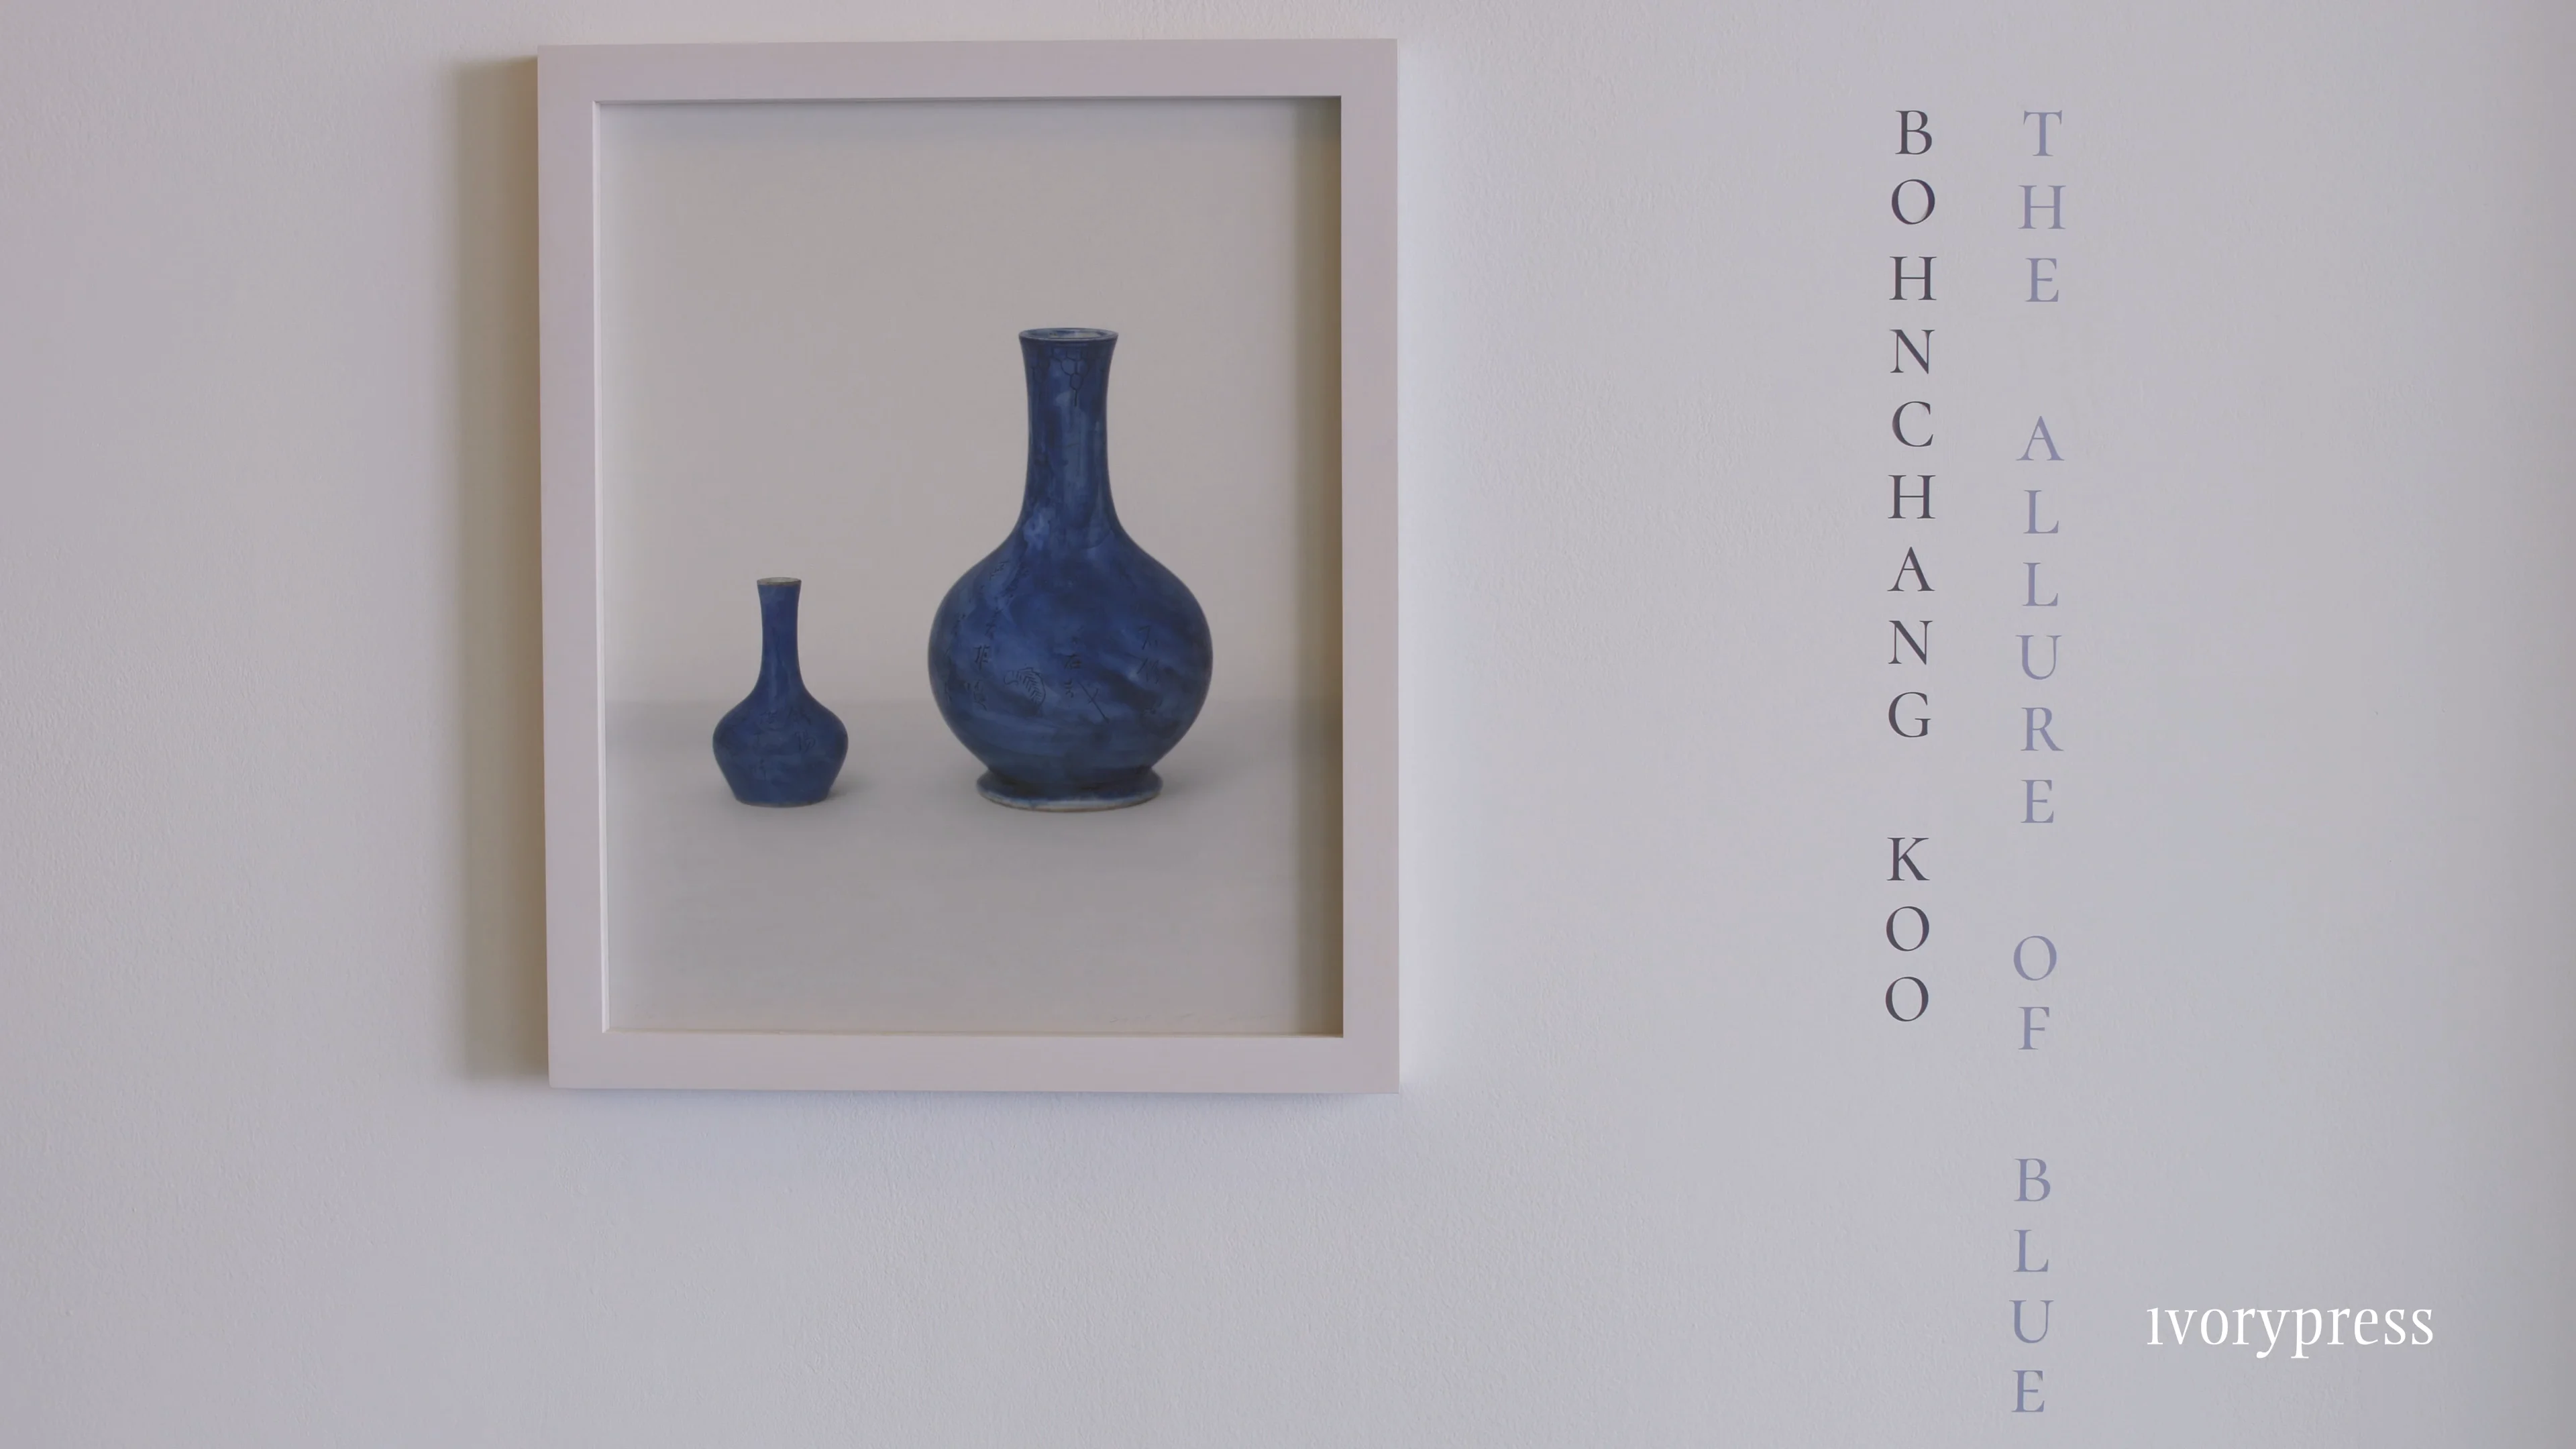 Bohnchang Koo. 'The Allure of Blue' 29/05/2019 - 27/07/2019 on Vimeo